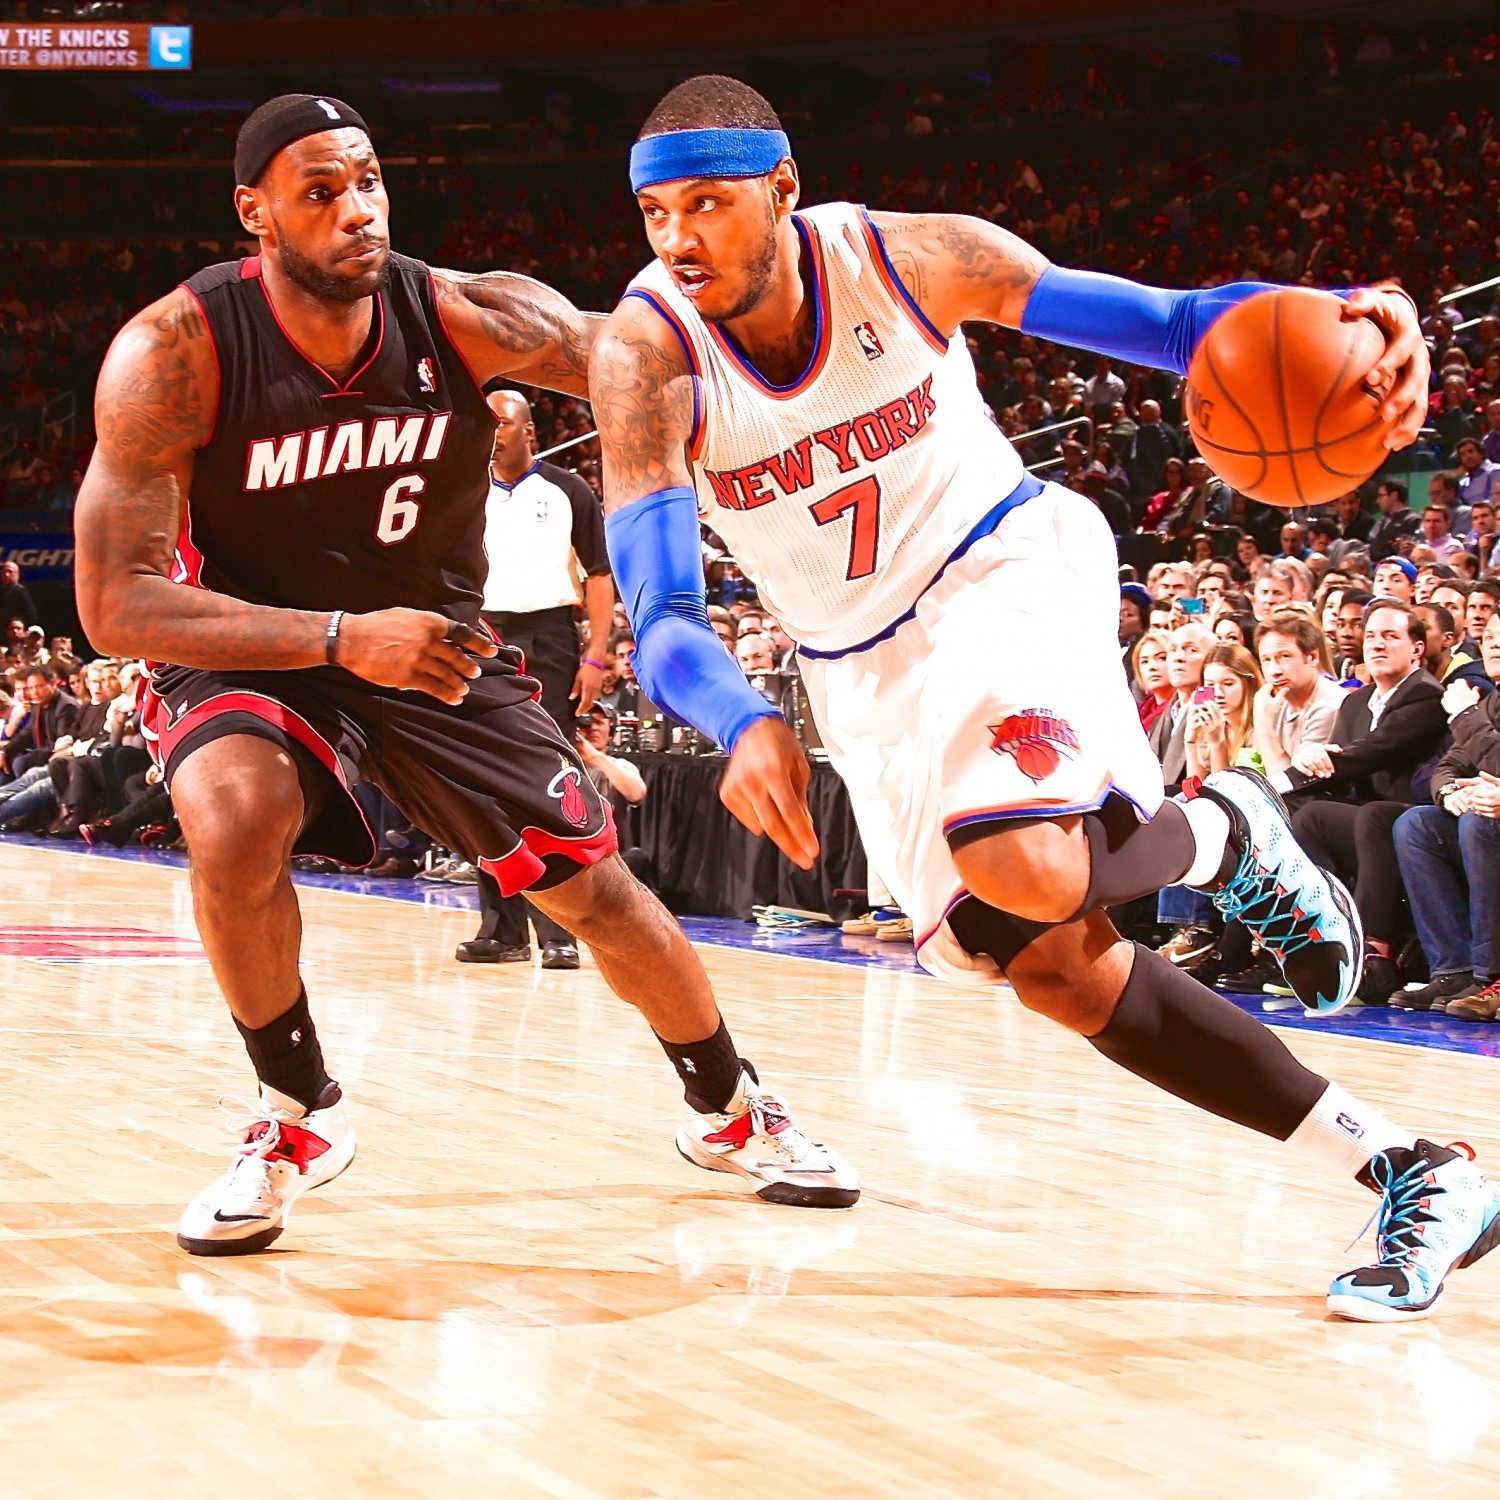 Miami Heat vs. New York Knicks Live Score and Analysis Bleacher Report